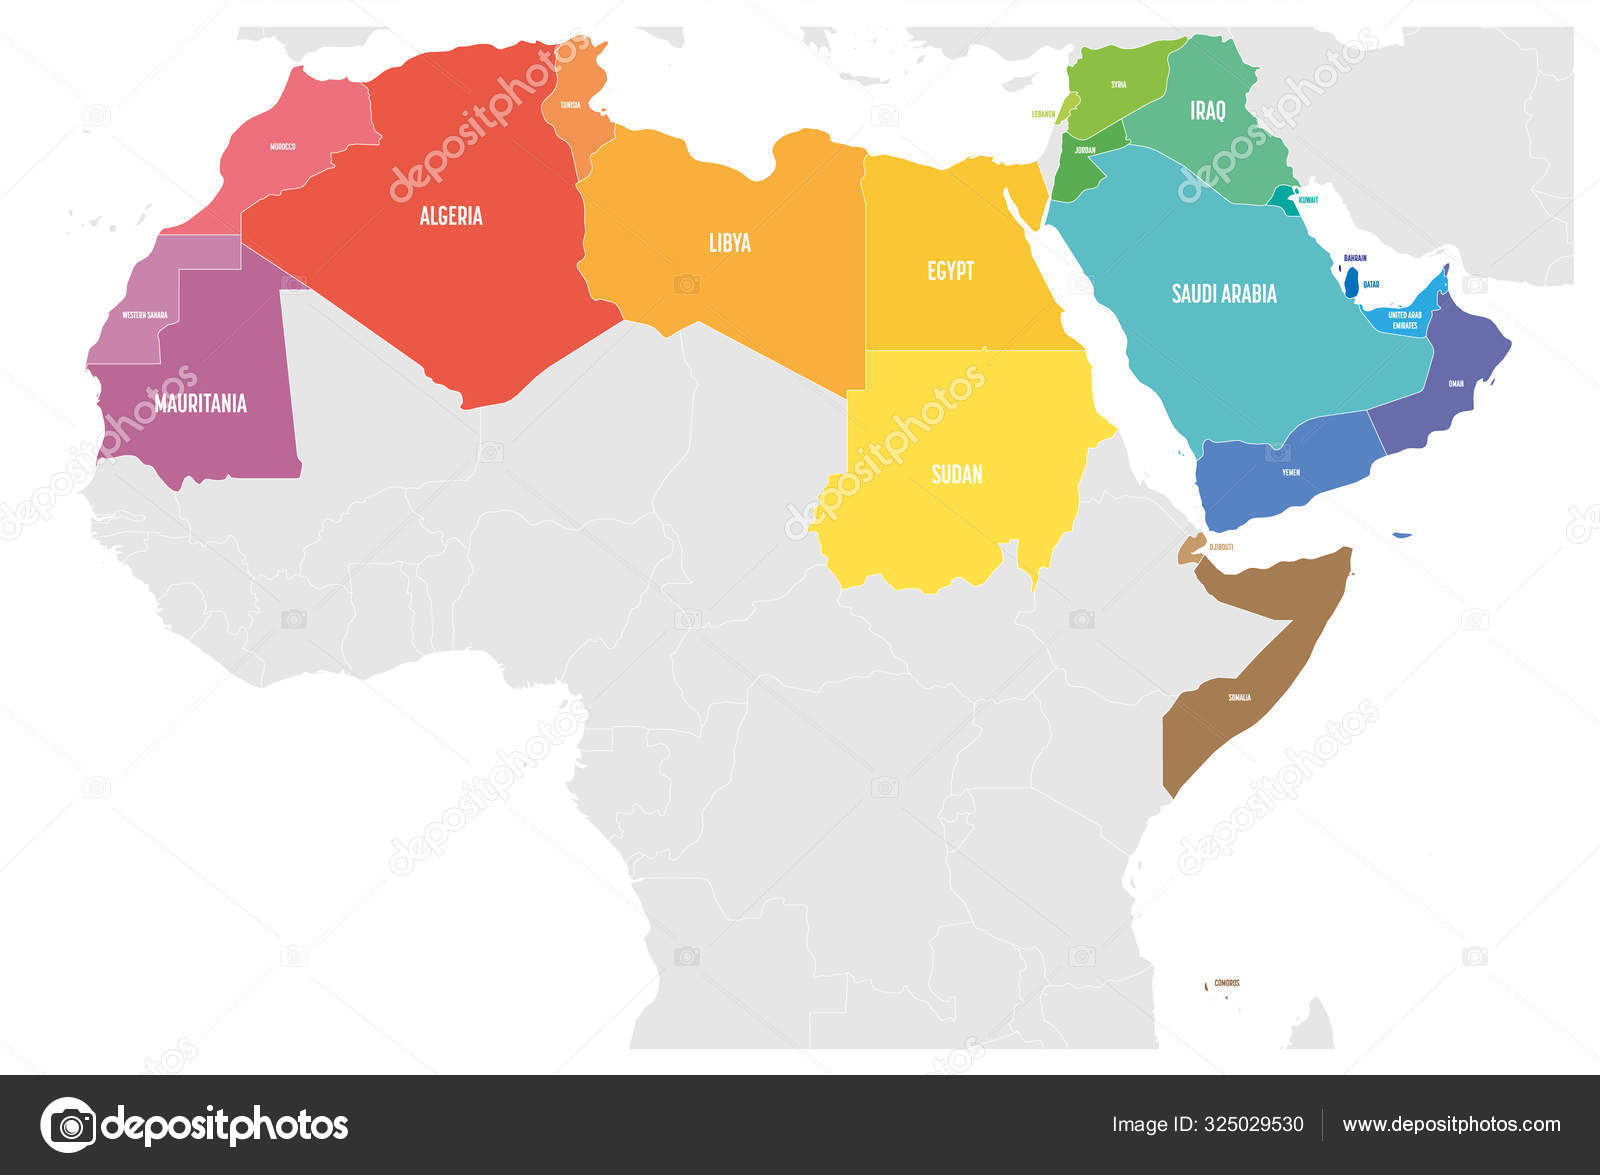 Depositphotos 325029530 Stock Illustration Arab World States Political Map 